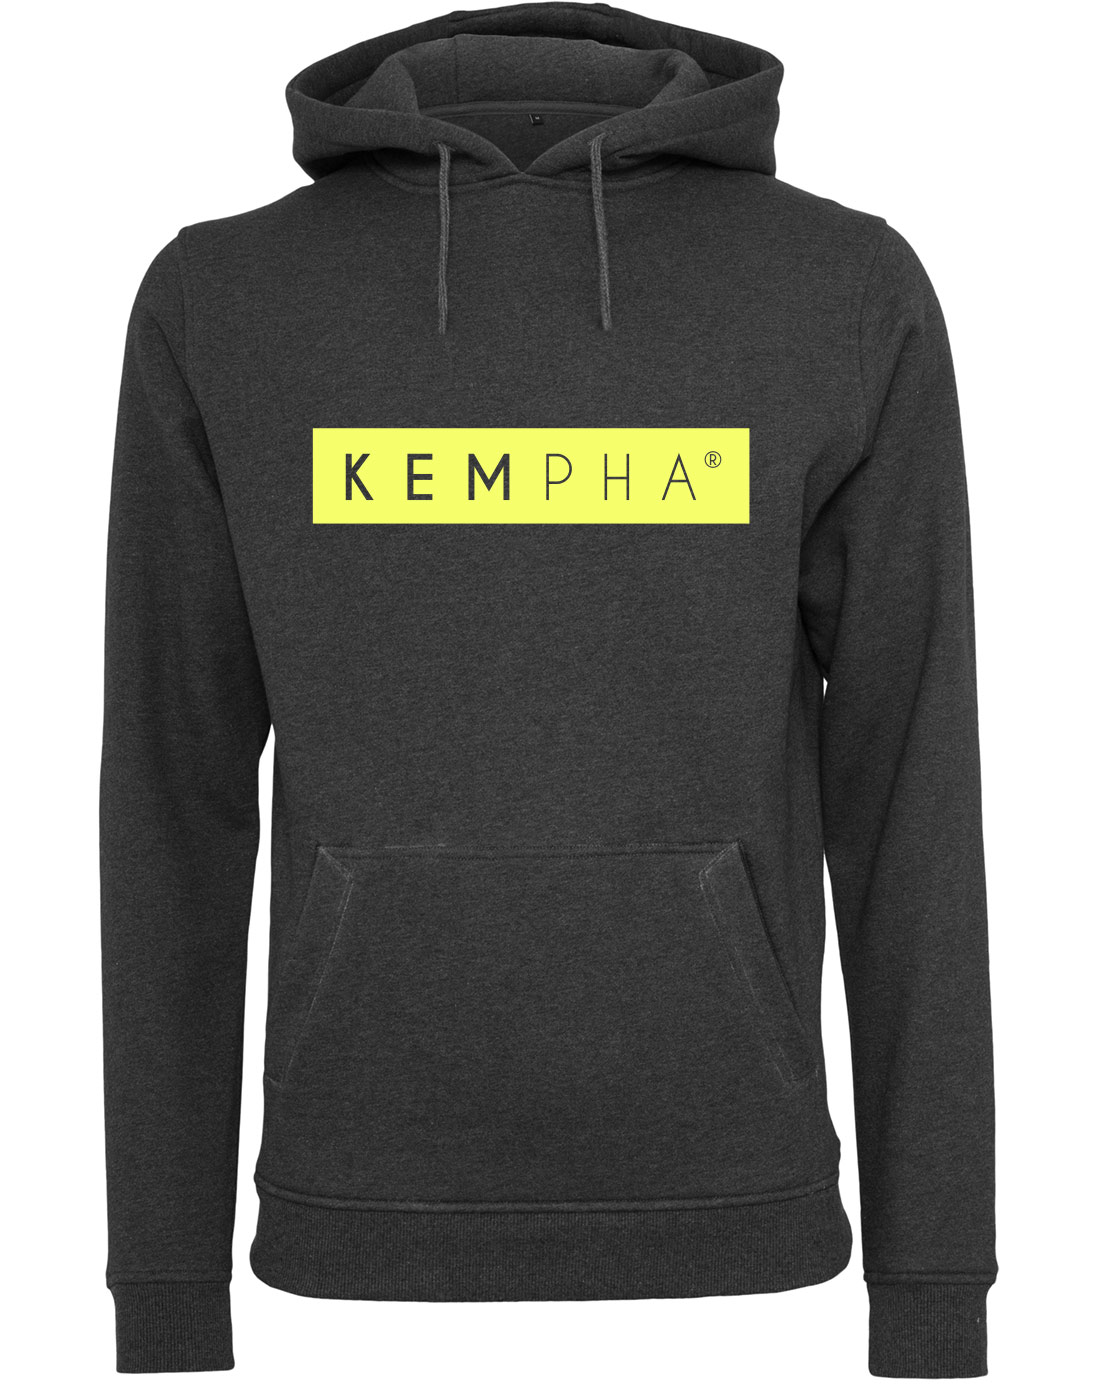 Kempha Premium Hoodie NEONgelb auf charcoal